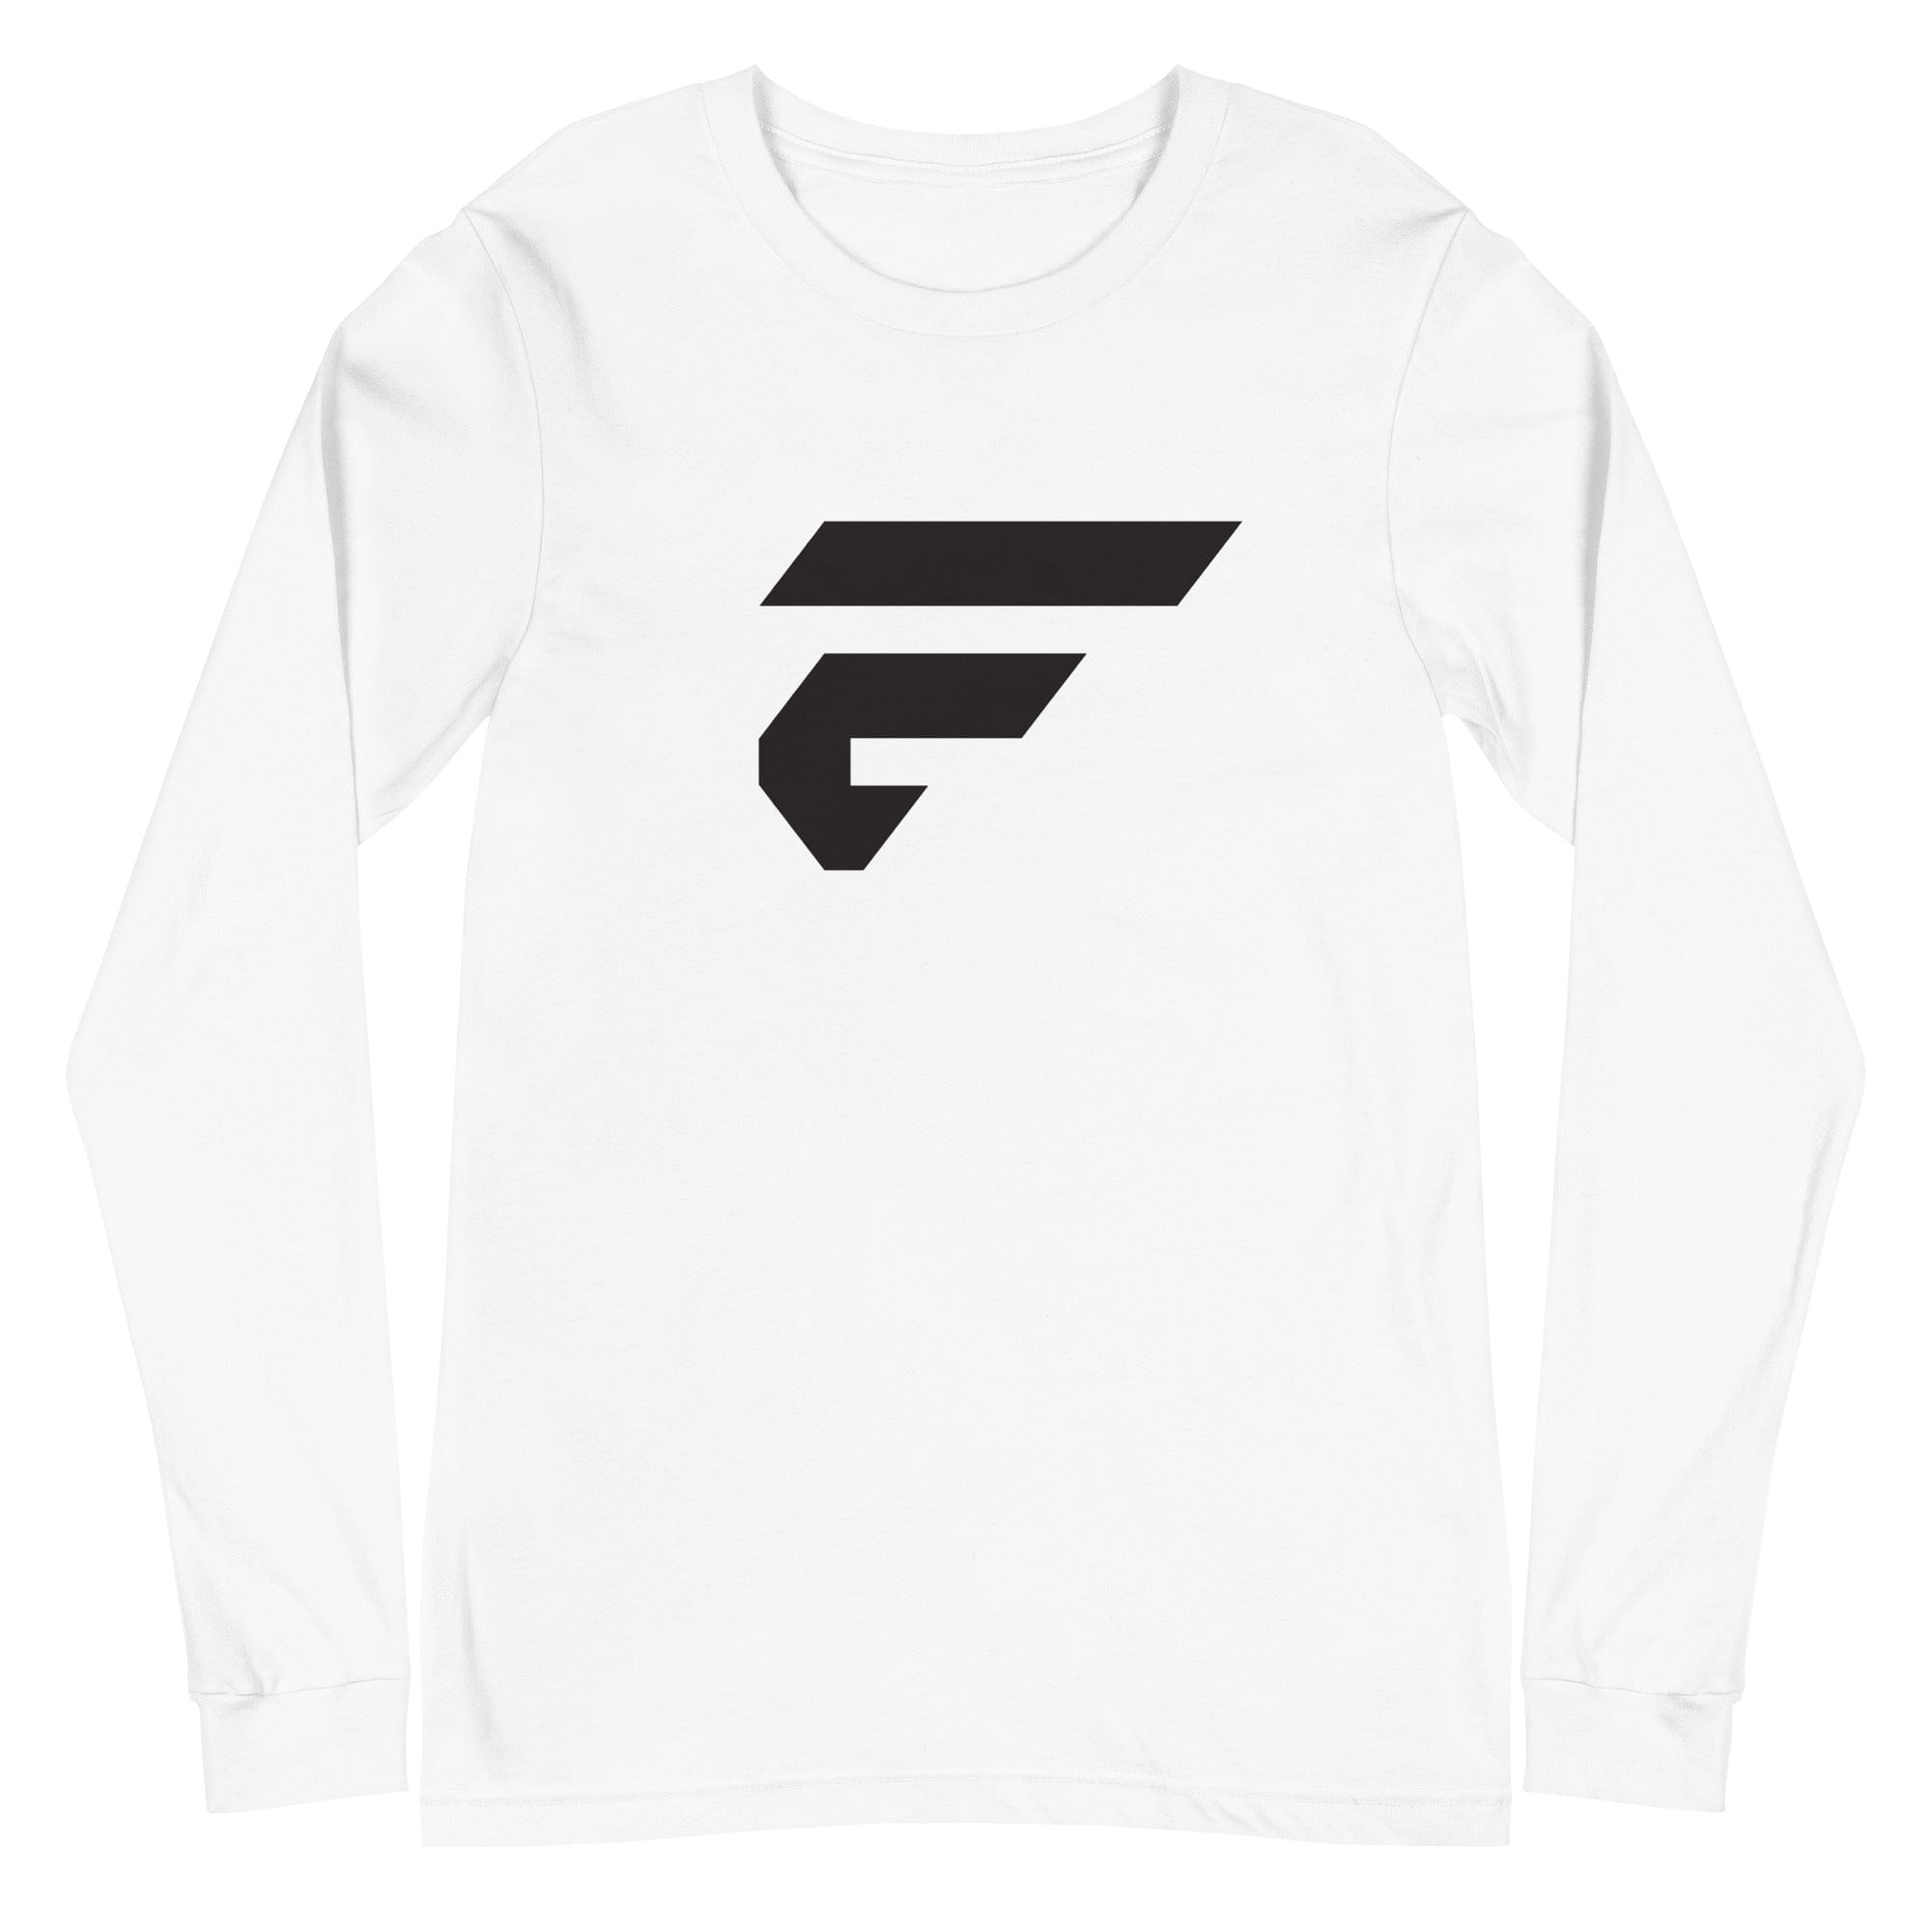 White unisex cotton longsleeve shirt with Fire Cornhole F logo in black